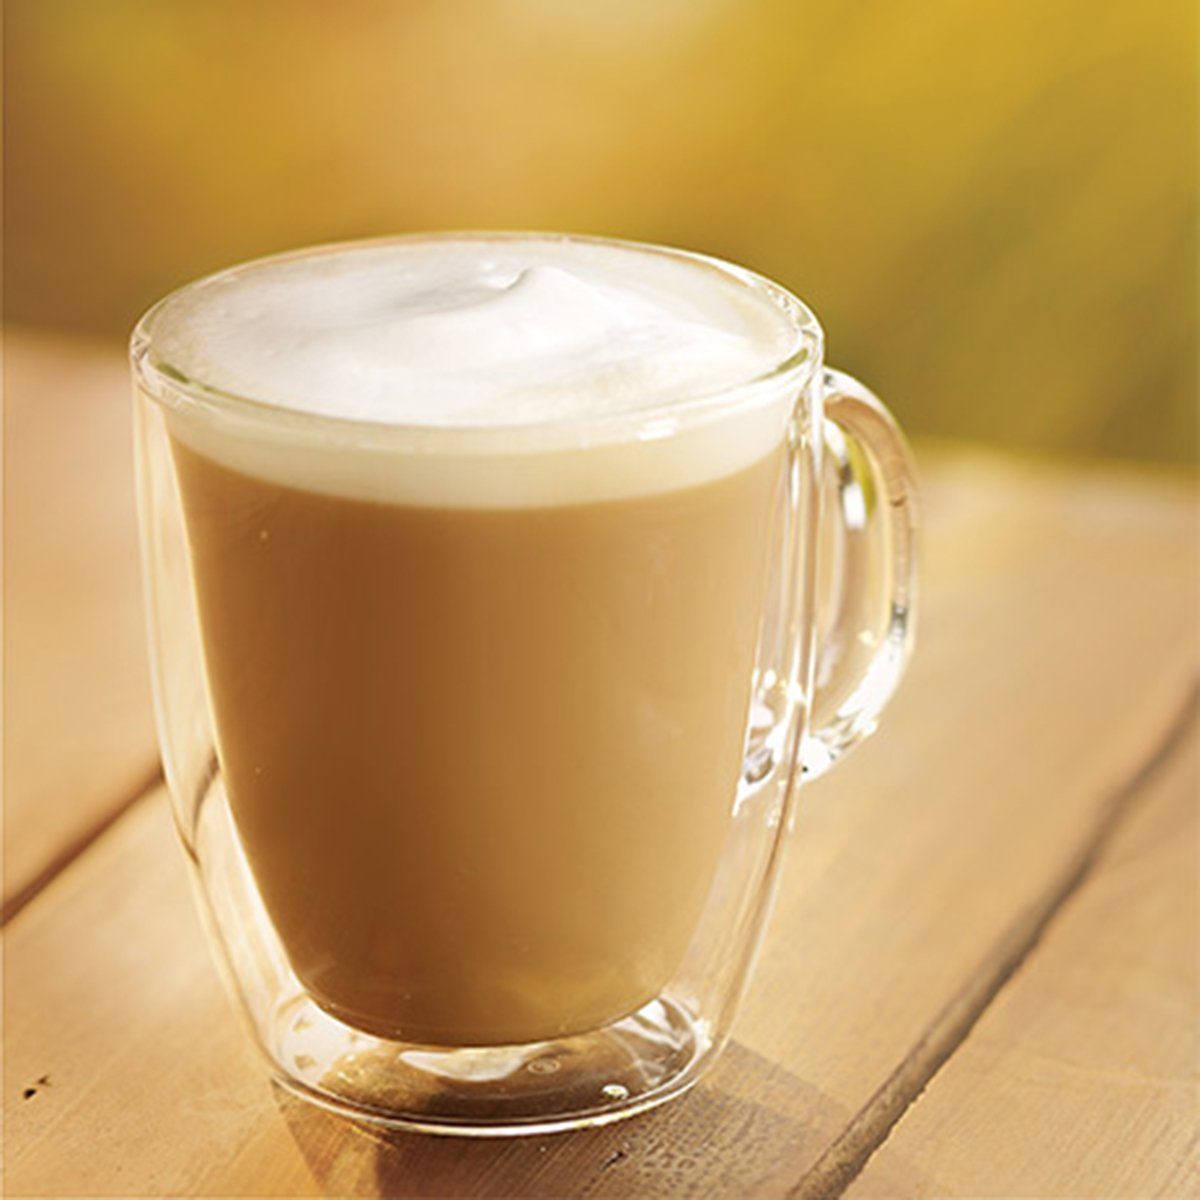 Skinny vanilla latte